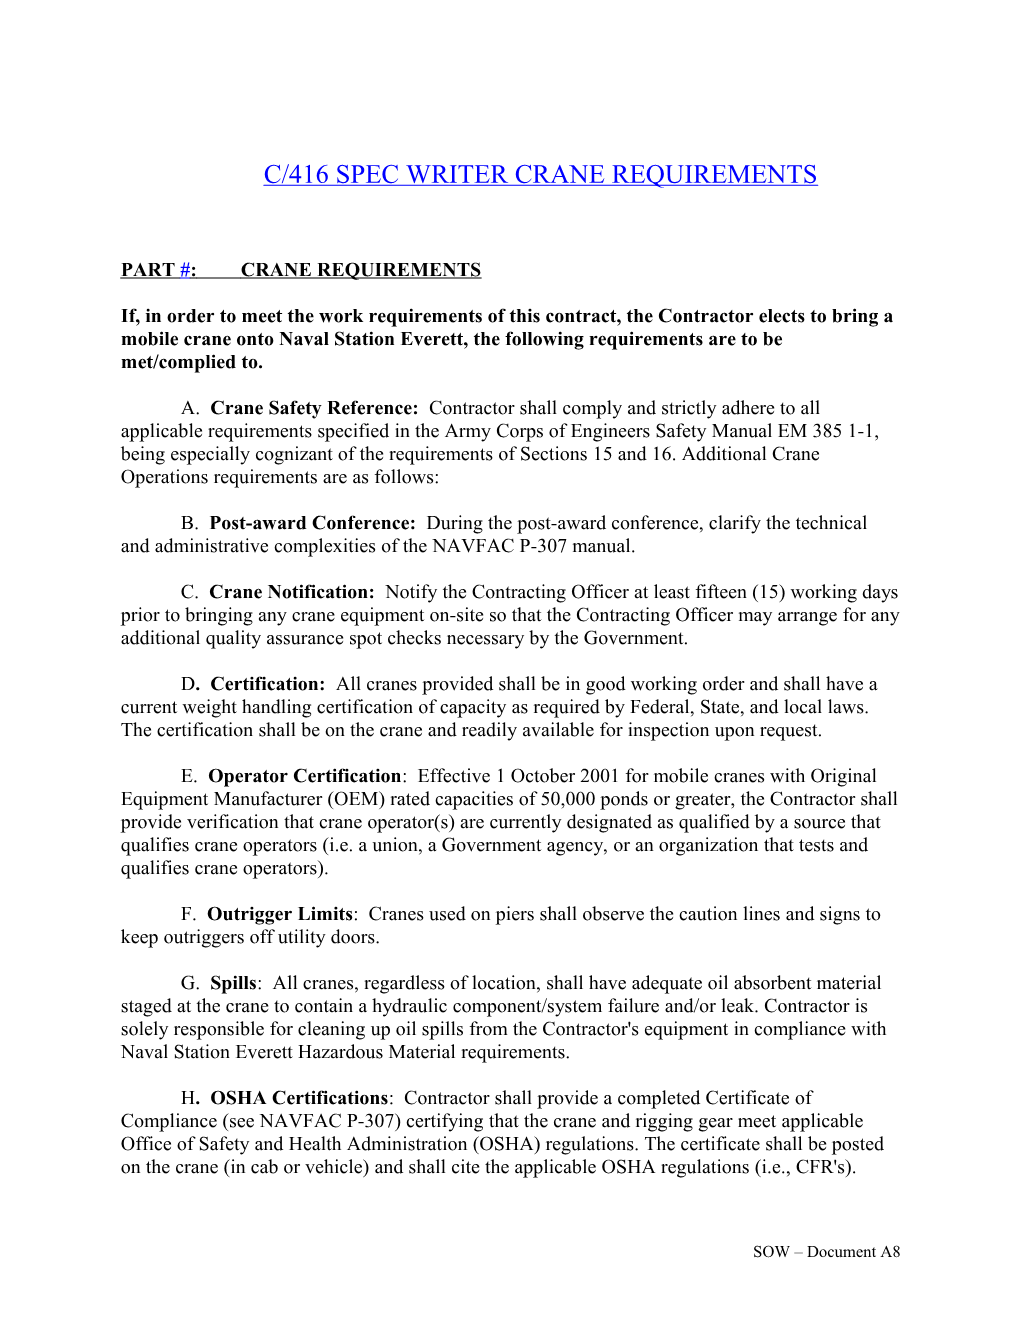 C/416 Spec Writer Crane Requirements